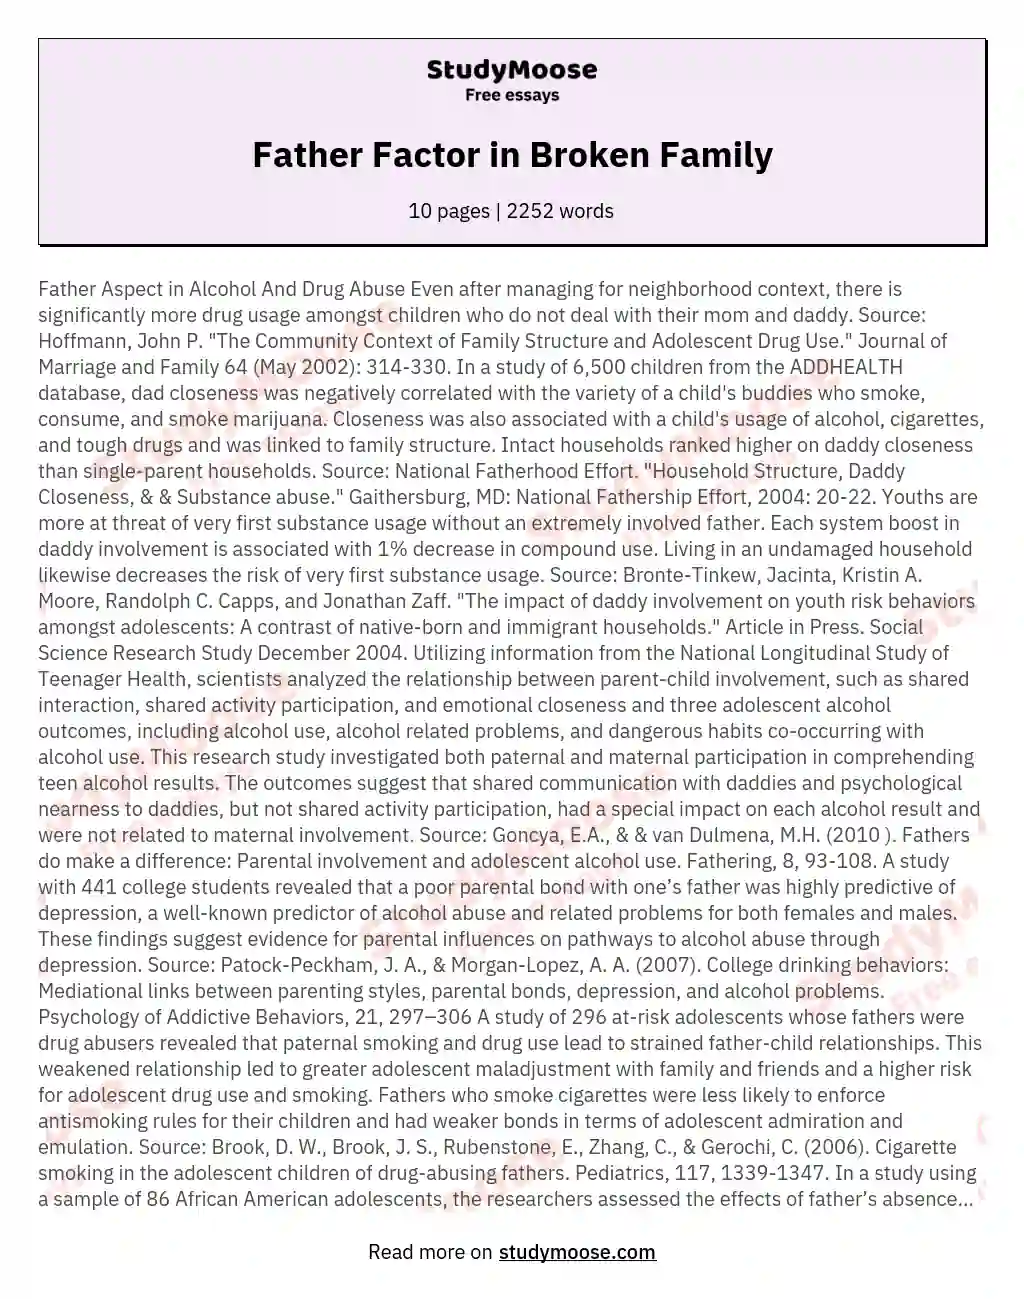 Father Factor in Broken Family essay